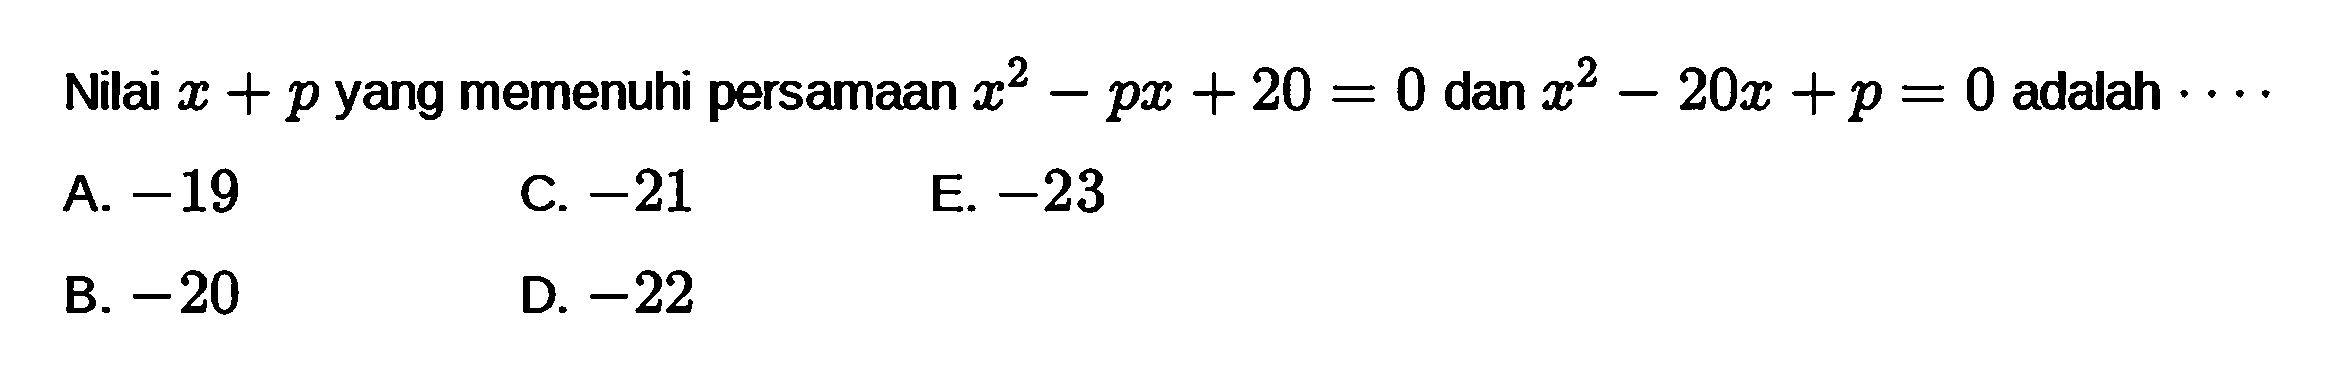 Nilai x + p yang memenuhi persamaan x^2 - px + 20 = 0 dan x^2 - 20x + p = 0 adalah ....